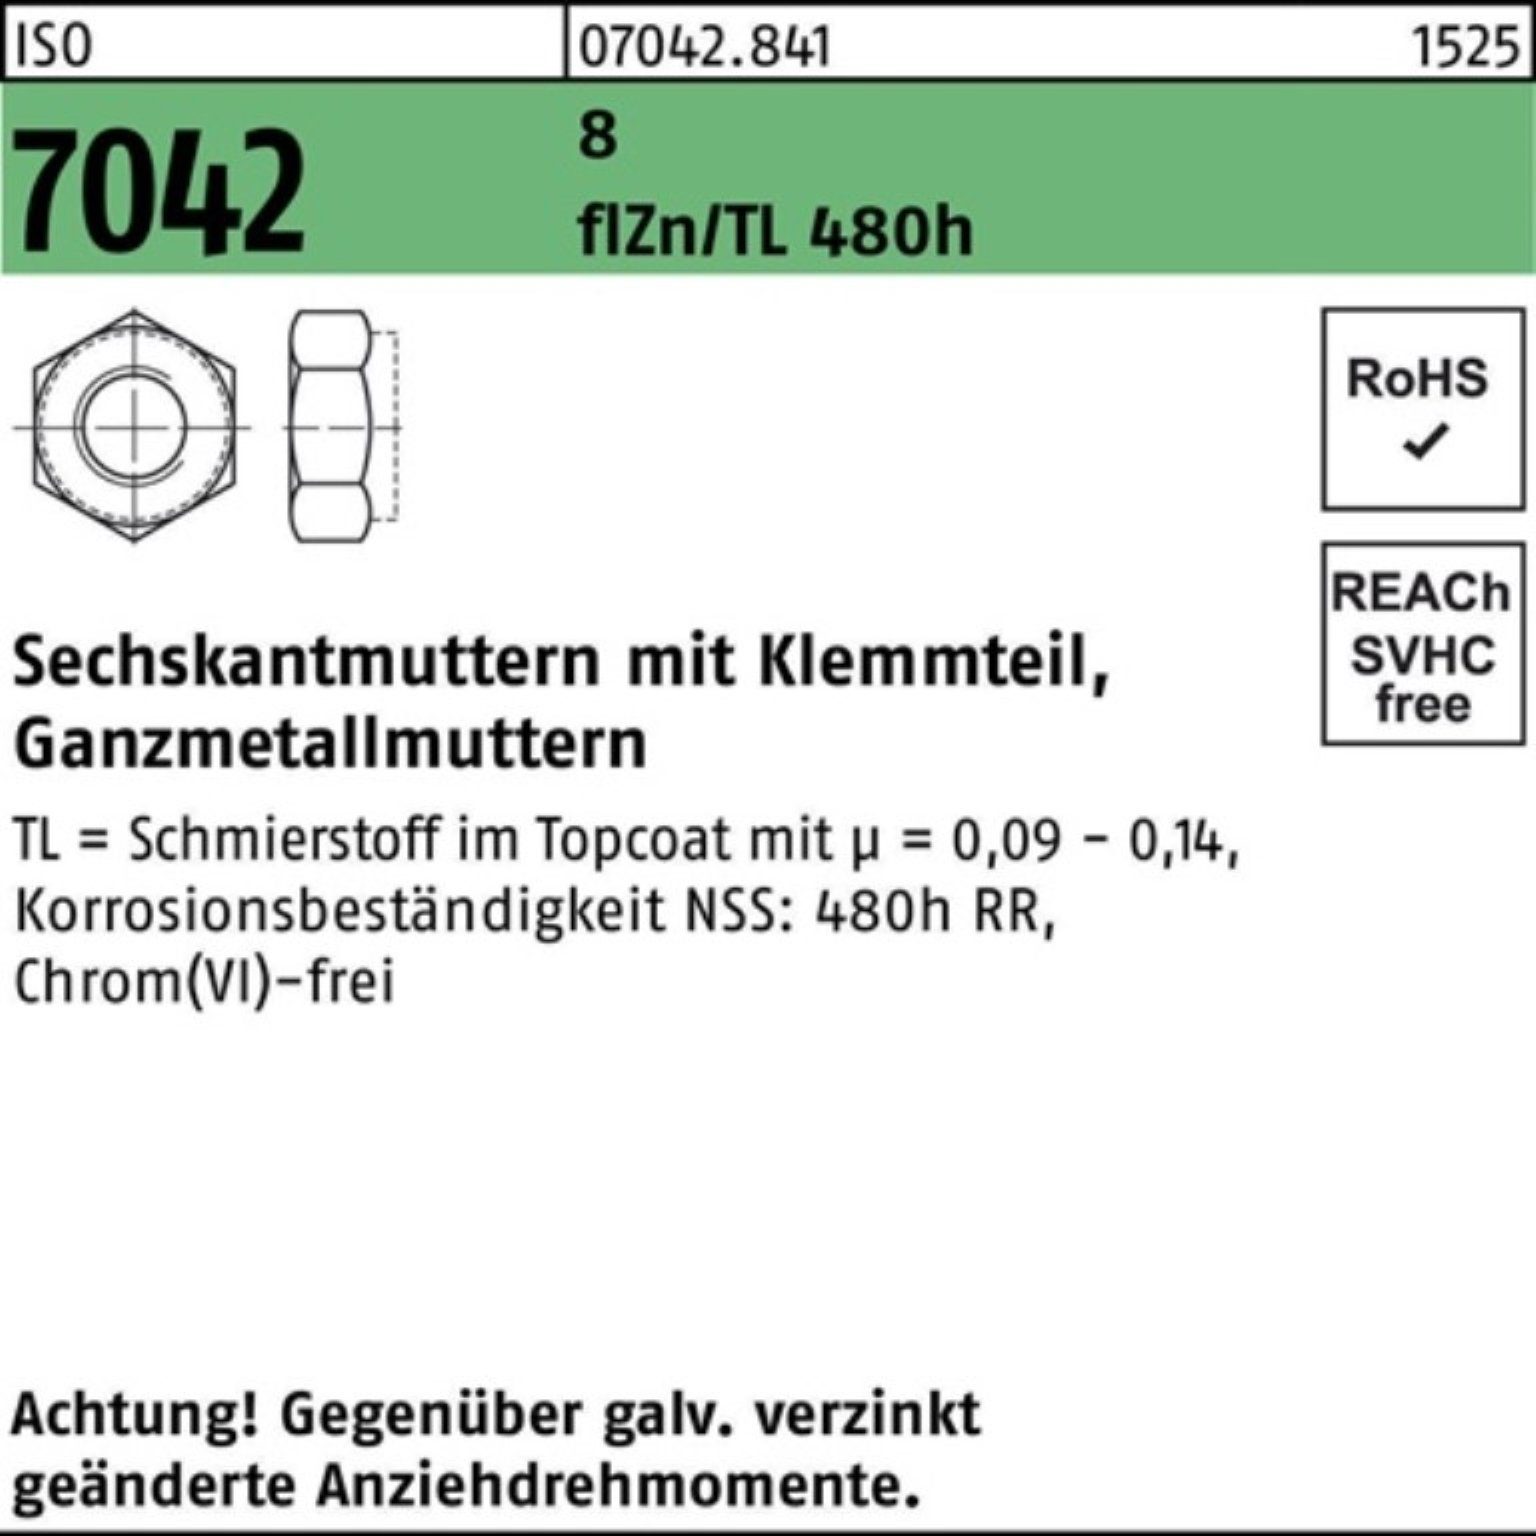 Sechskantmutter Klemmteil f ISO Reyher Pack zinklamellenbes. Muttern M20 100er 8 7042